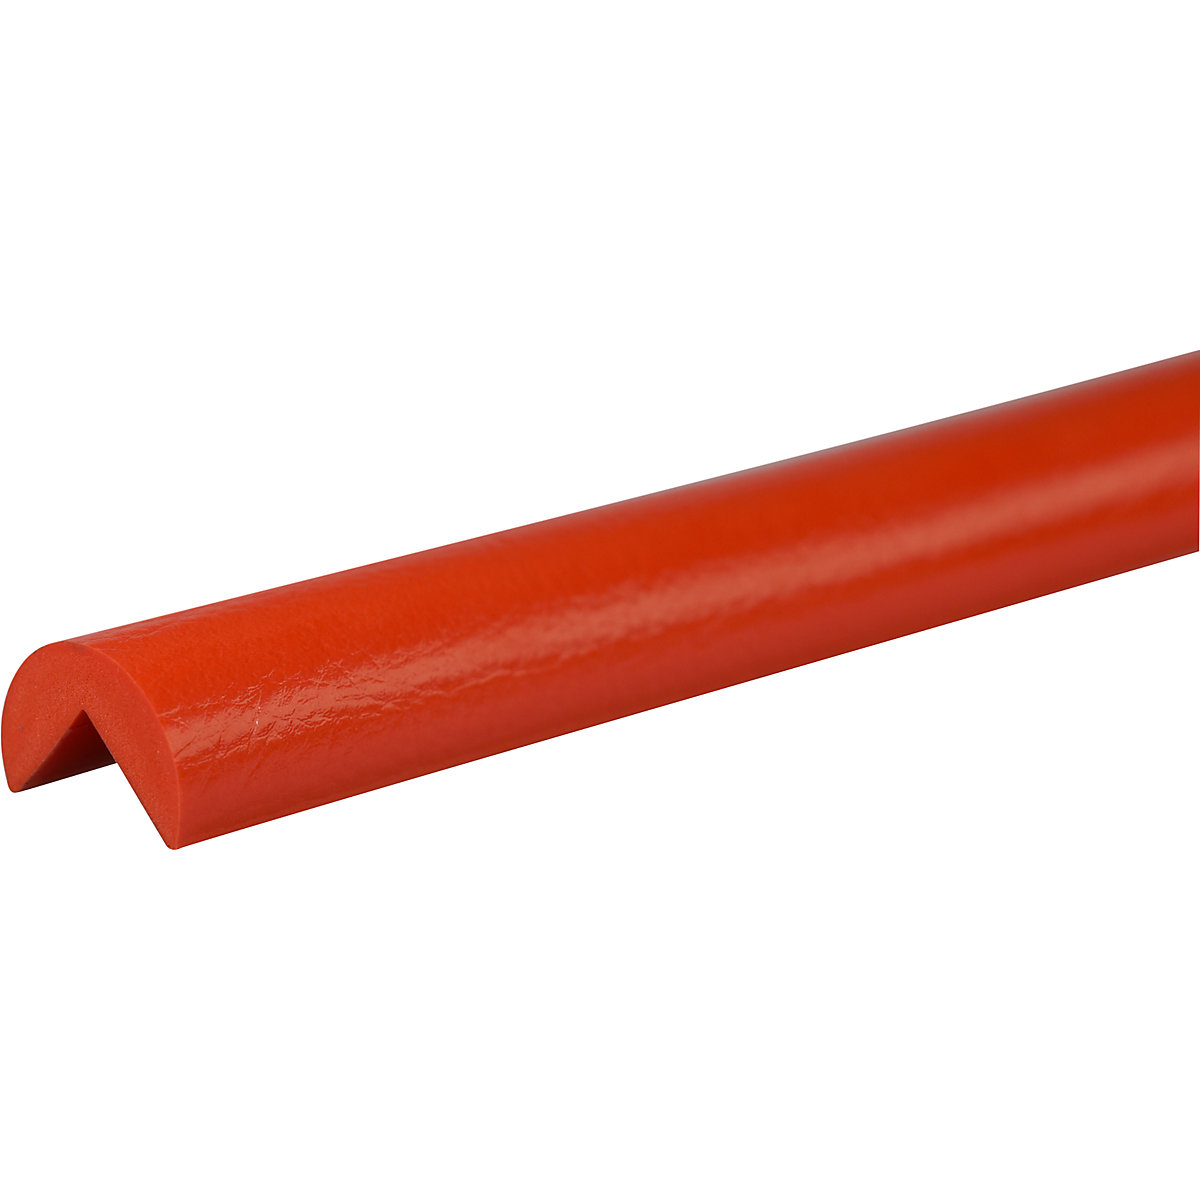 Knuffi®-hoekbescherming – SHG, type A, stuk van 1 m, rood-32